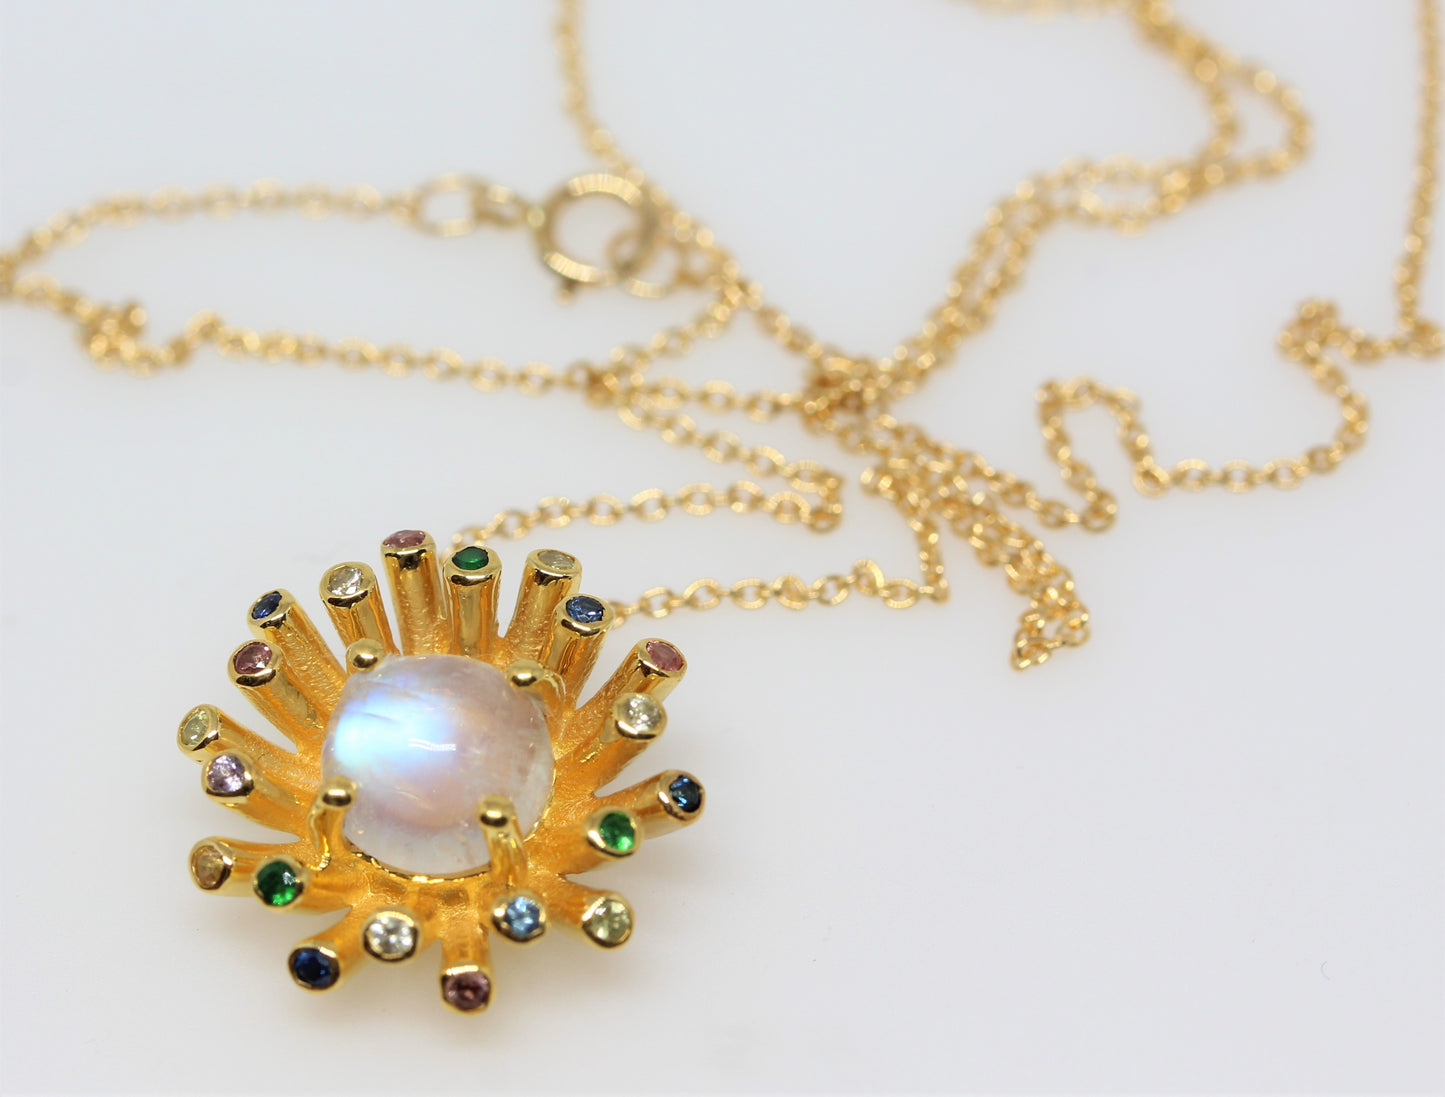 Starburst Moonstone Pendant- 24k Gold Plated - Gemstone Necklace #278